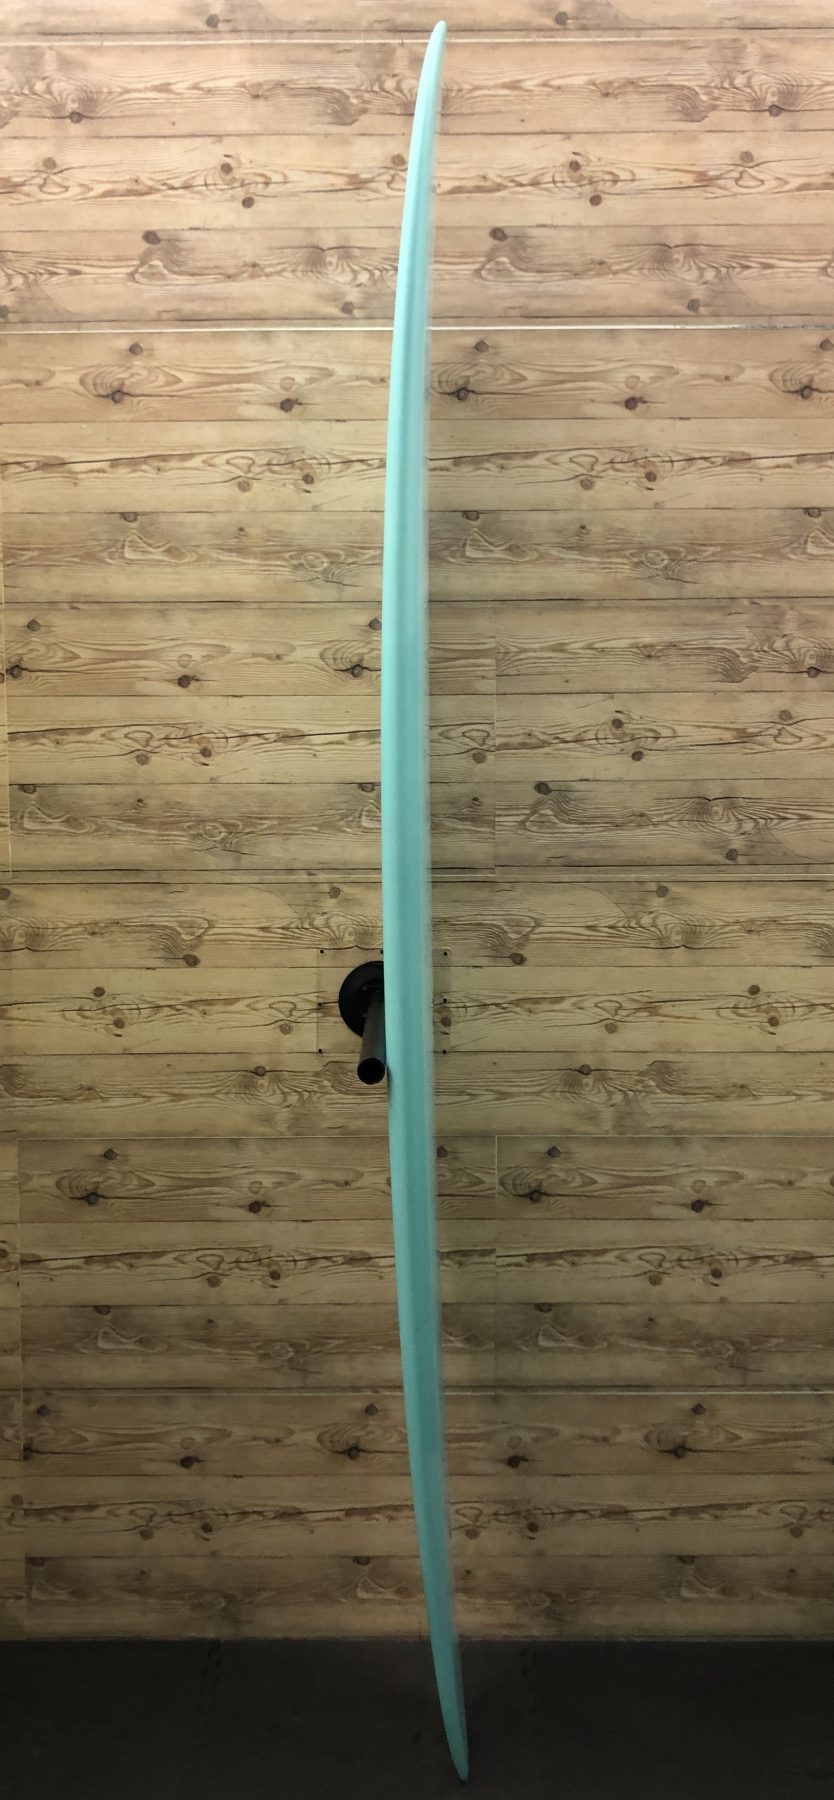 Classic Longboard 9'2"